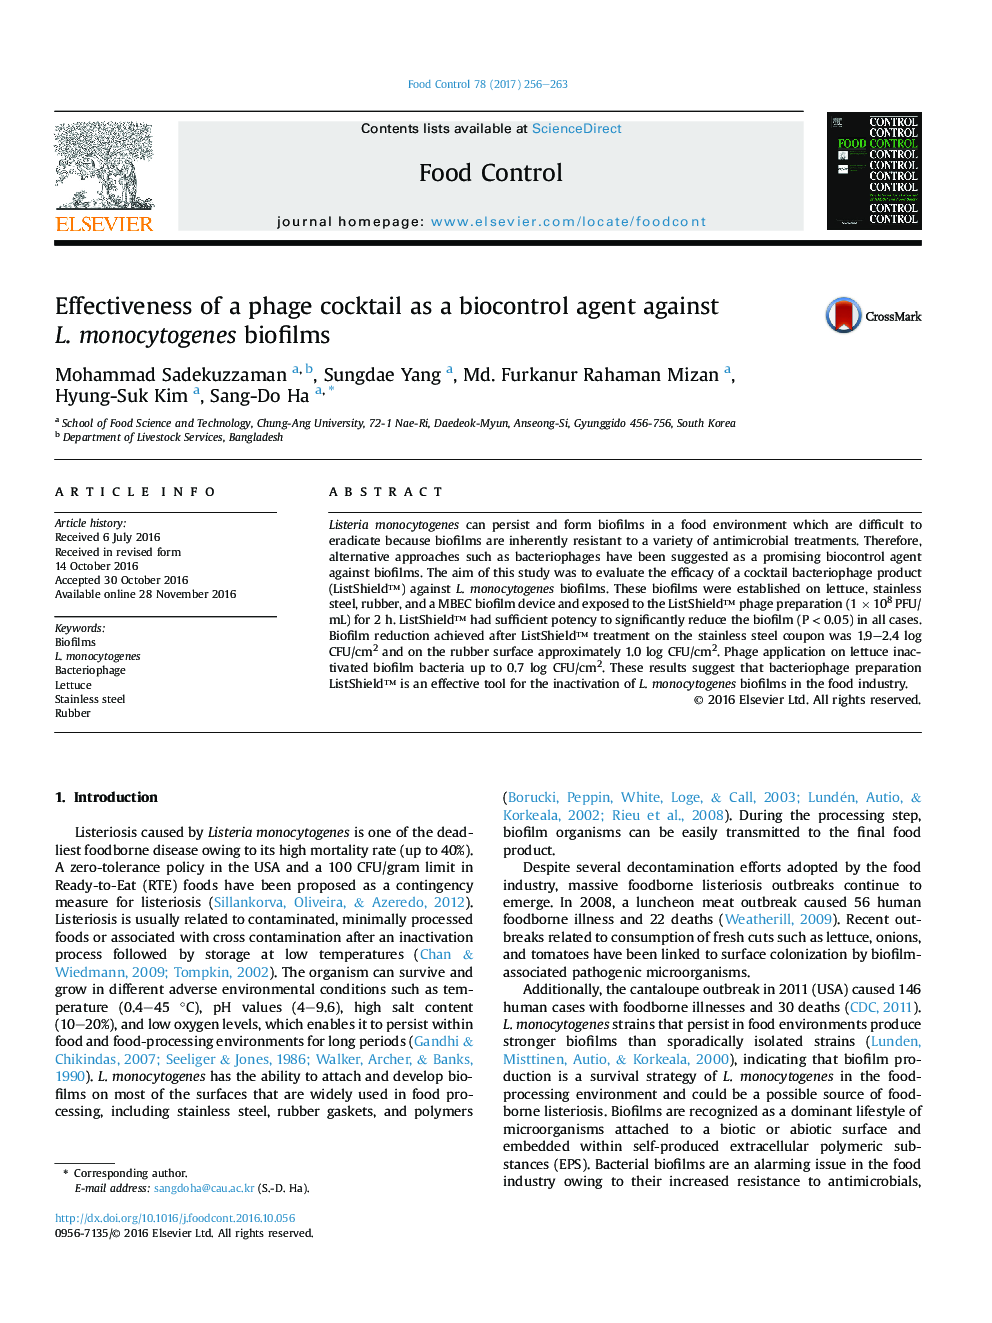 Effectiveness of a phage cocktail as a biocontrol agent against L.Â monocytogenes biofilms